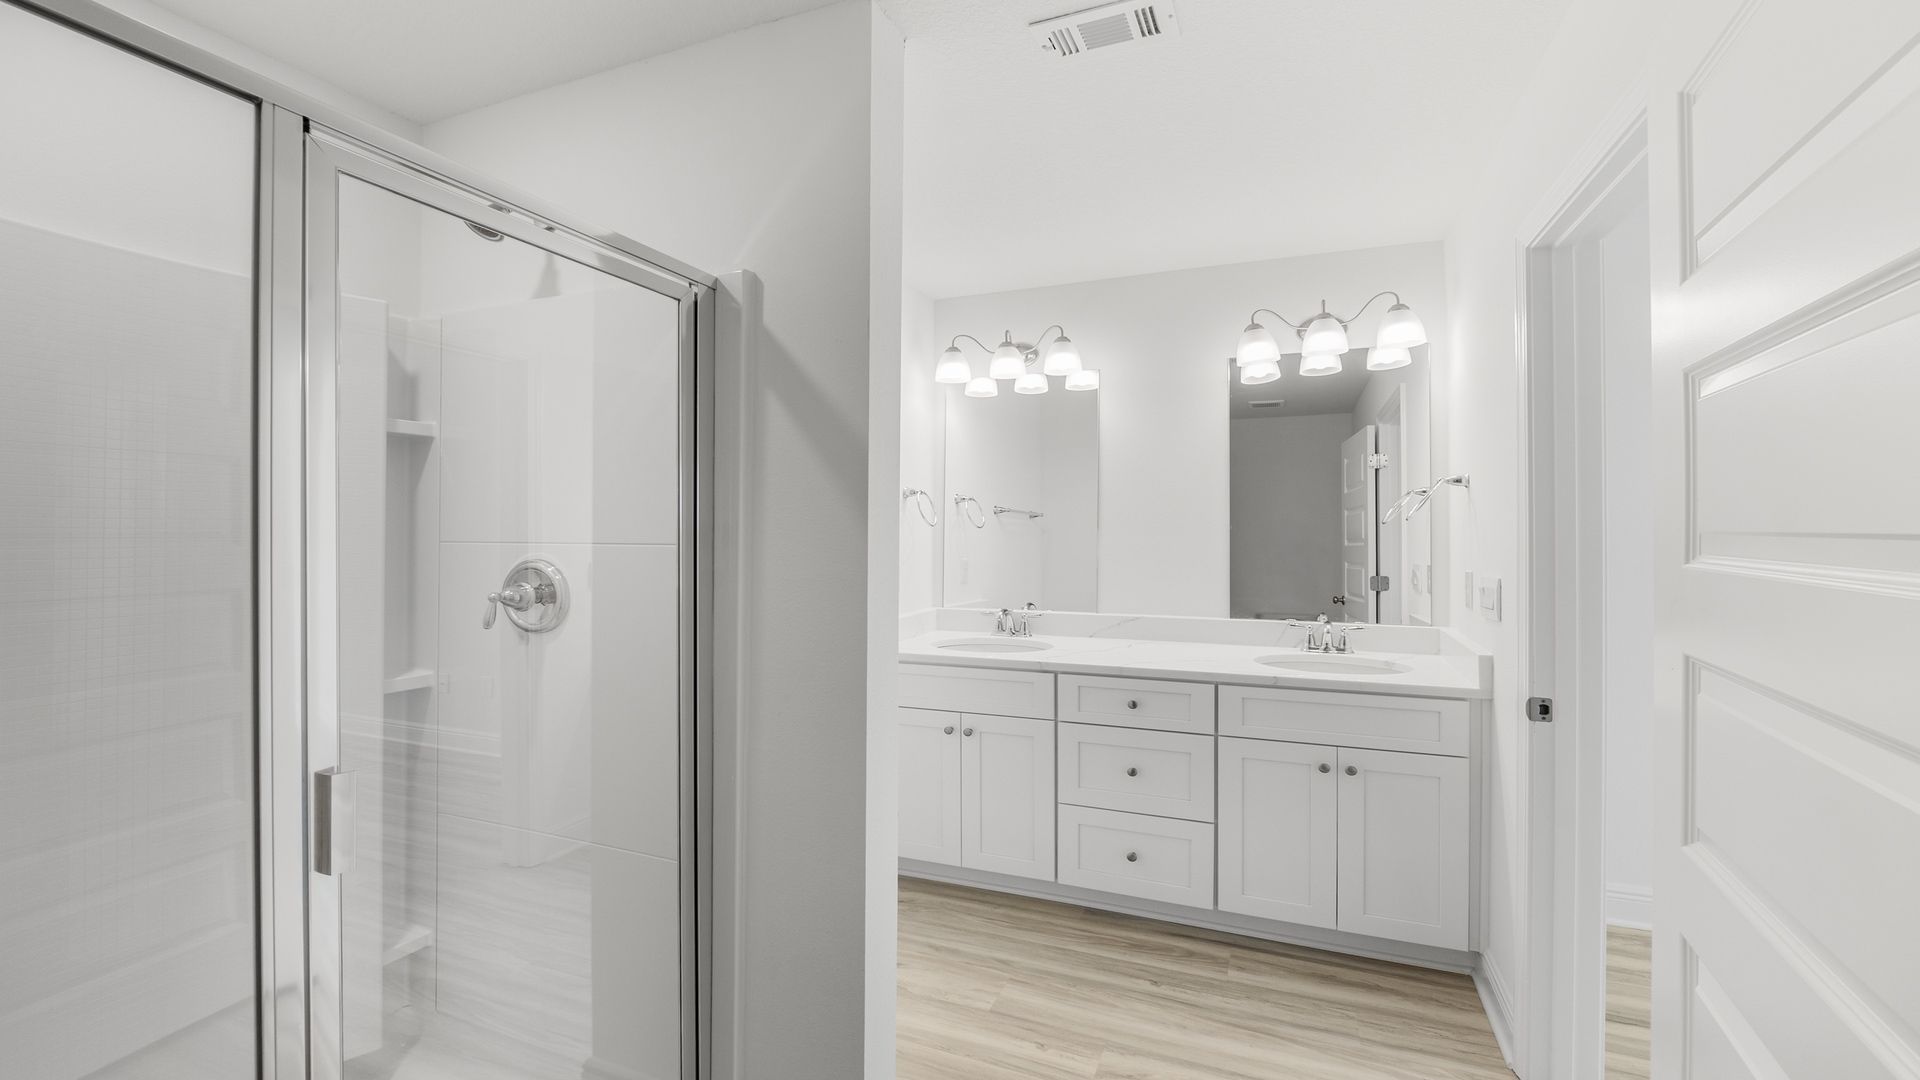 Bathroom with double vanity quartz counter tops and shower with glass door.